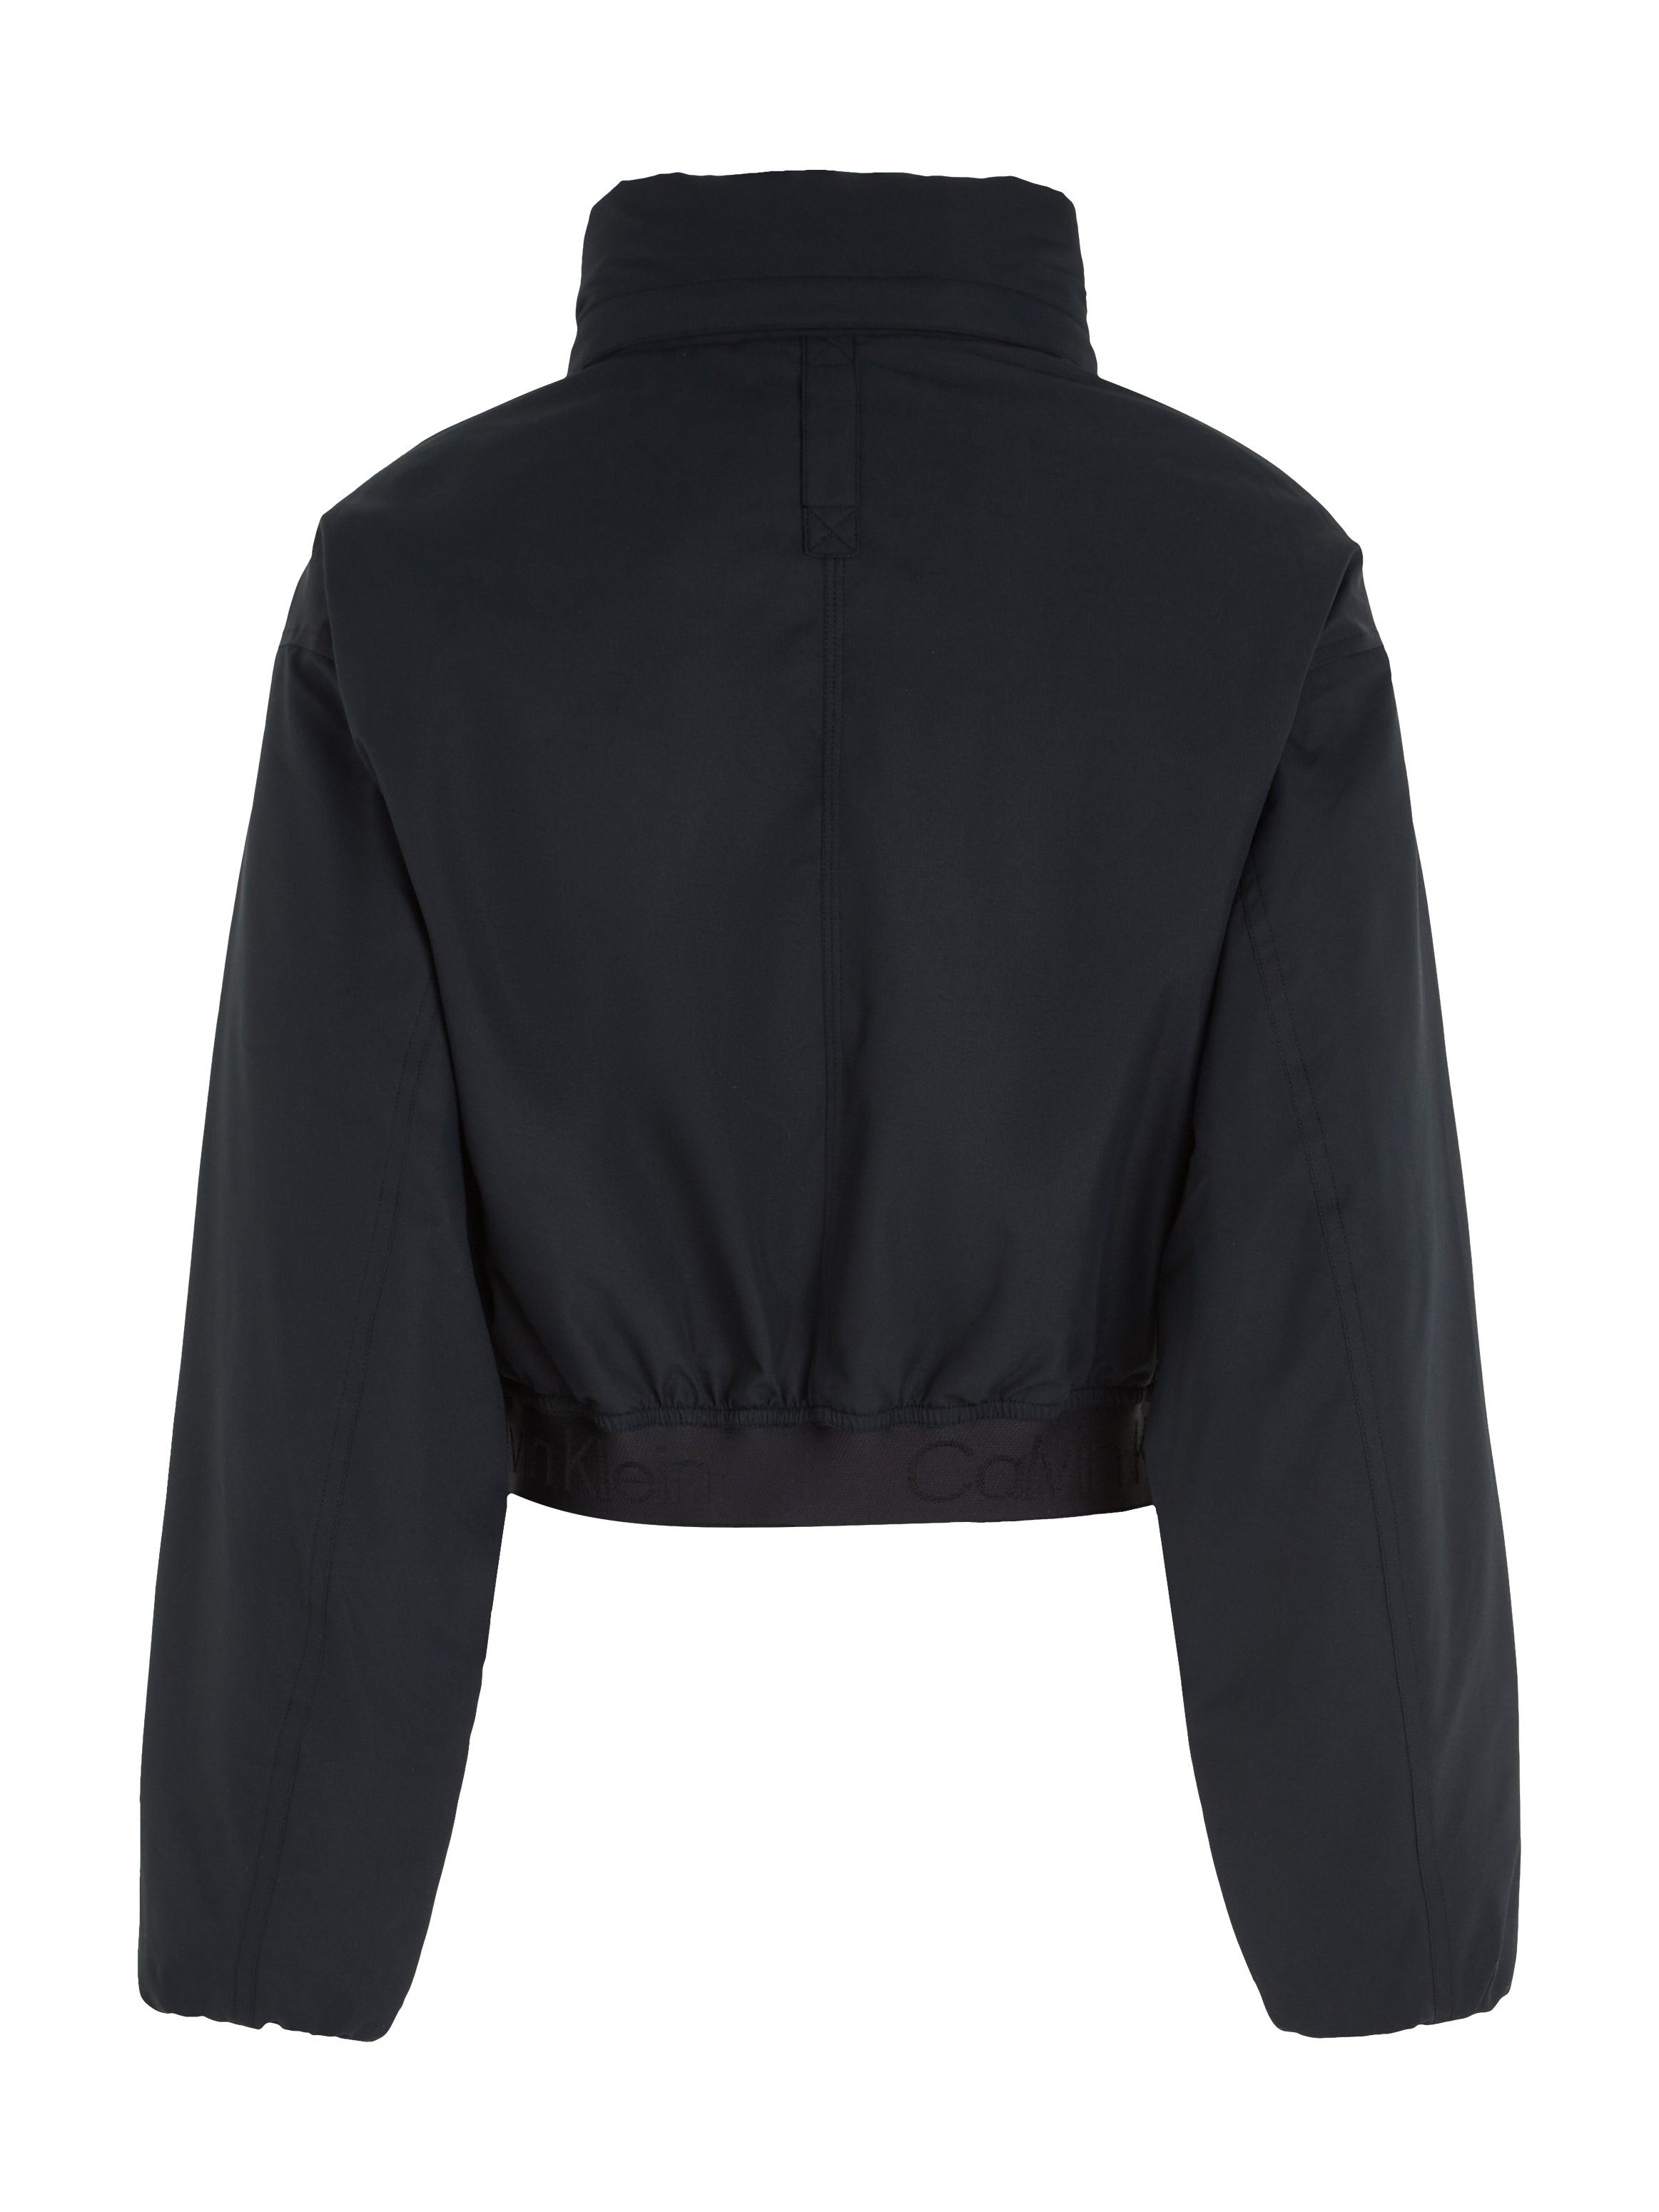 Calvin Klein Sport Outdoorjacke Jacket PW Padded - schwarz